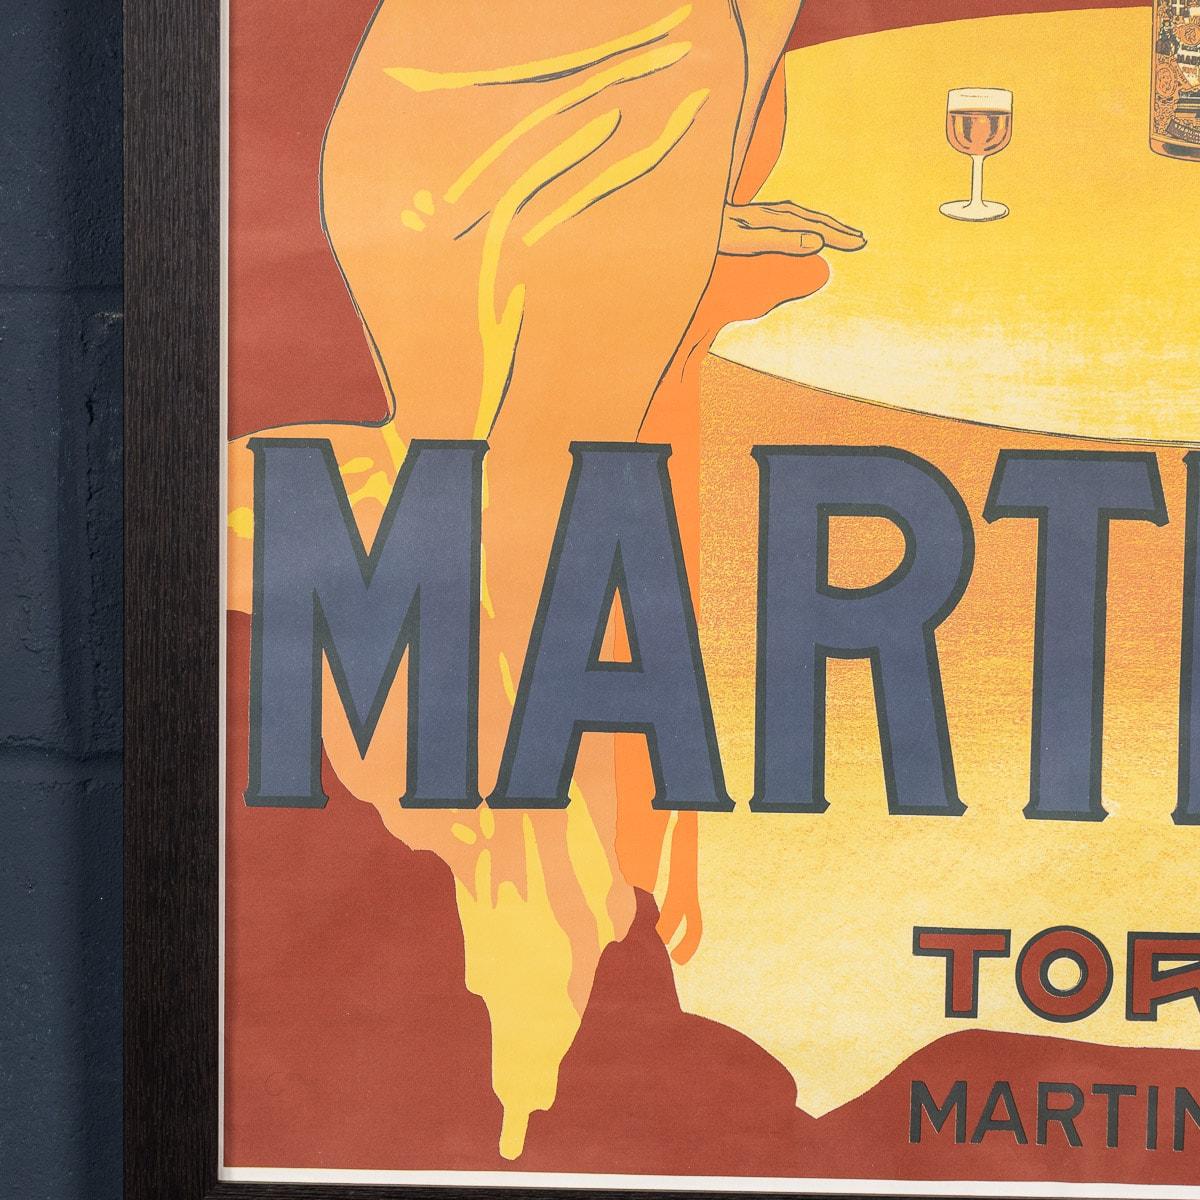 Gerahmtes Werbeplakat für Martini, Italien, um 1970 2